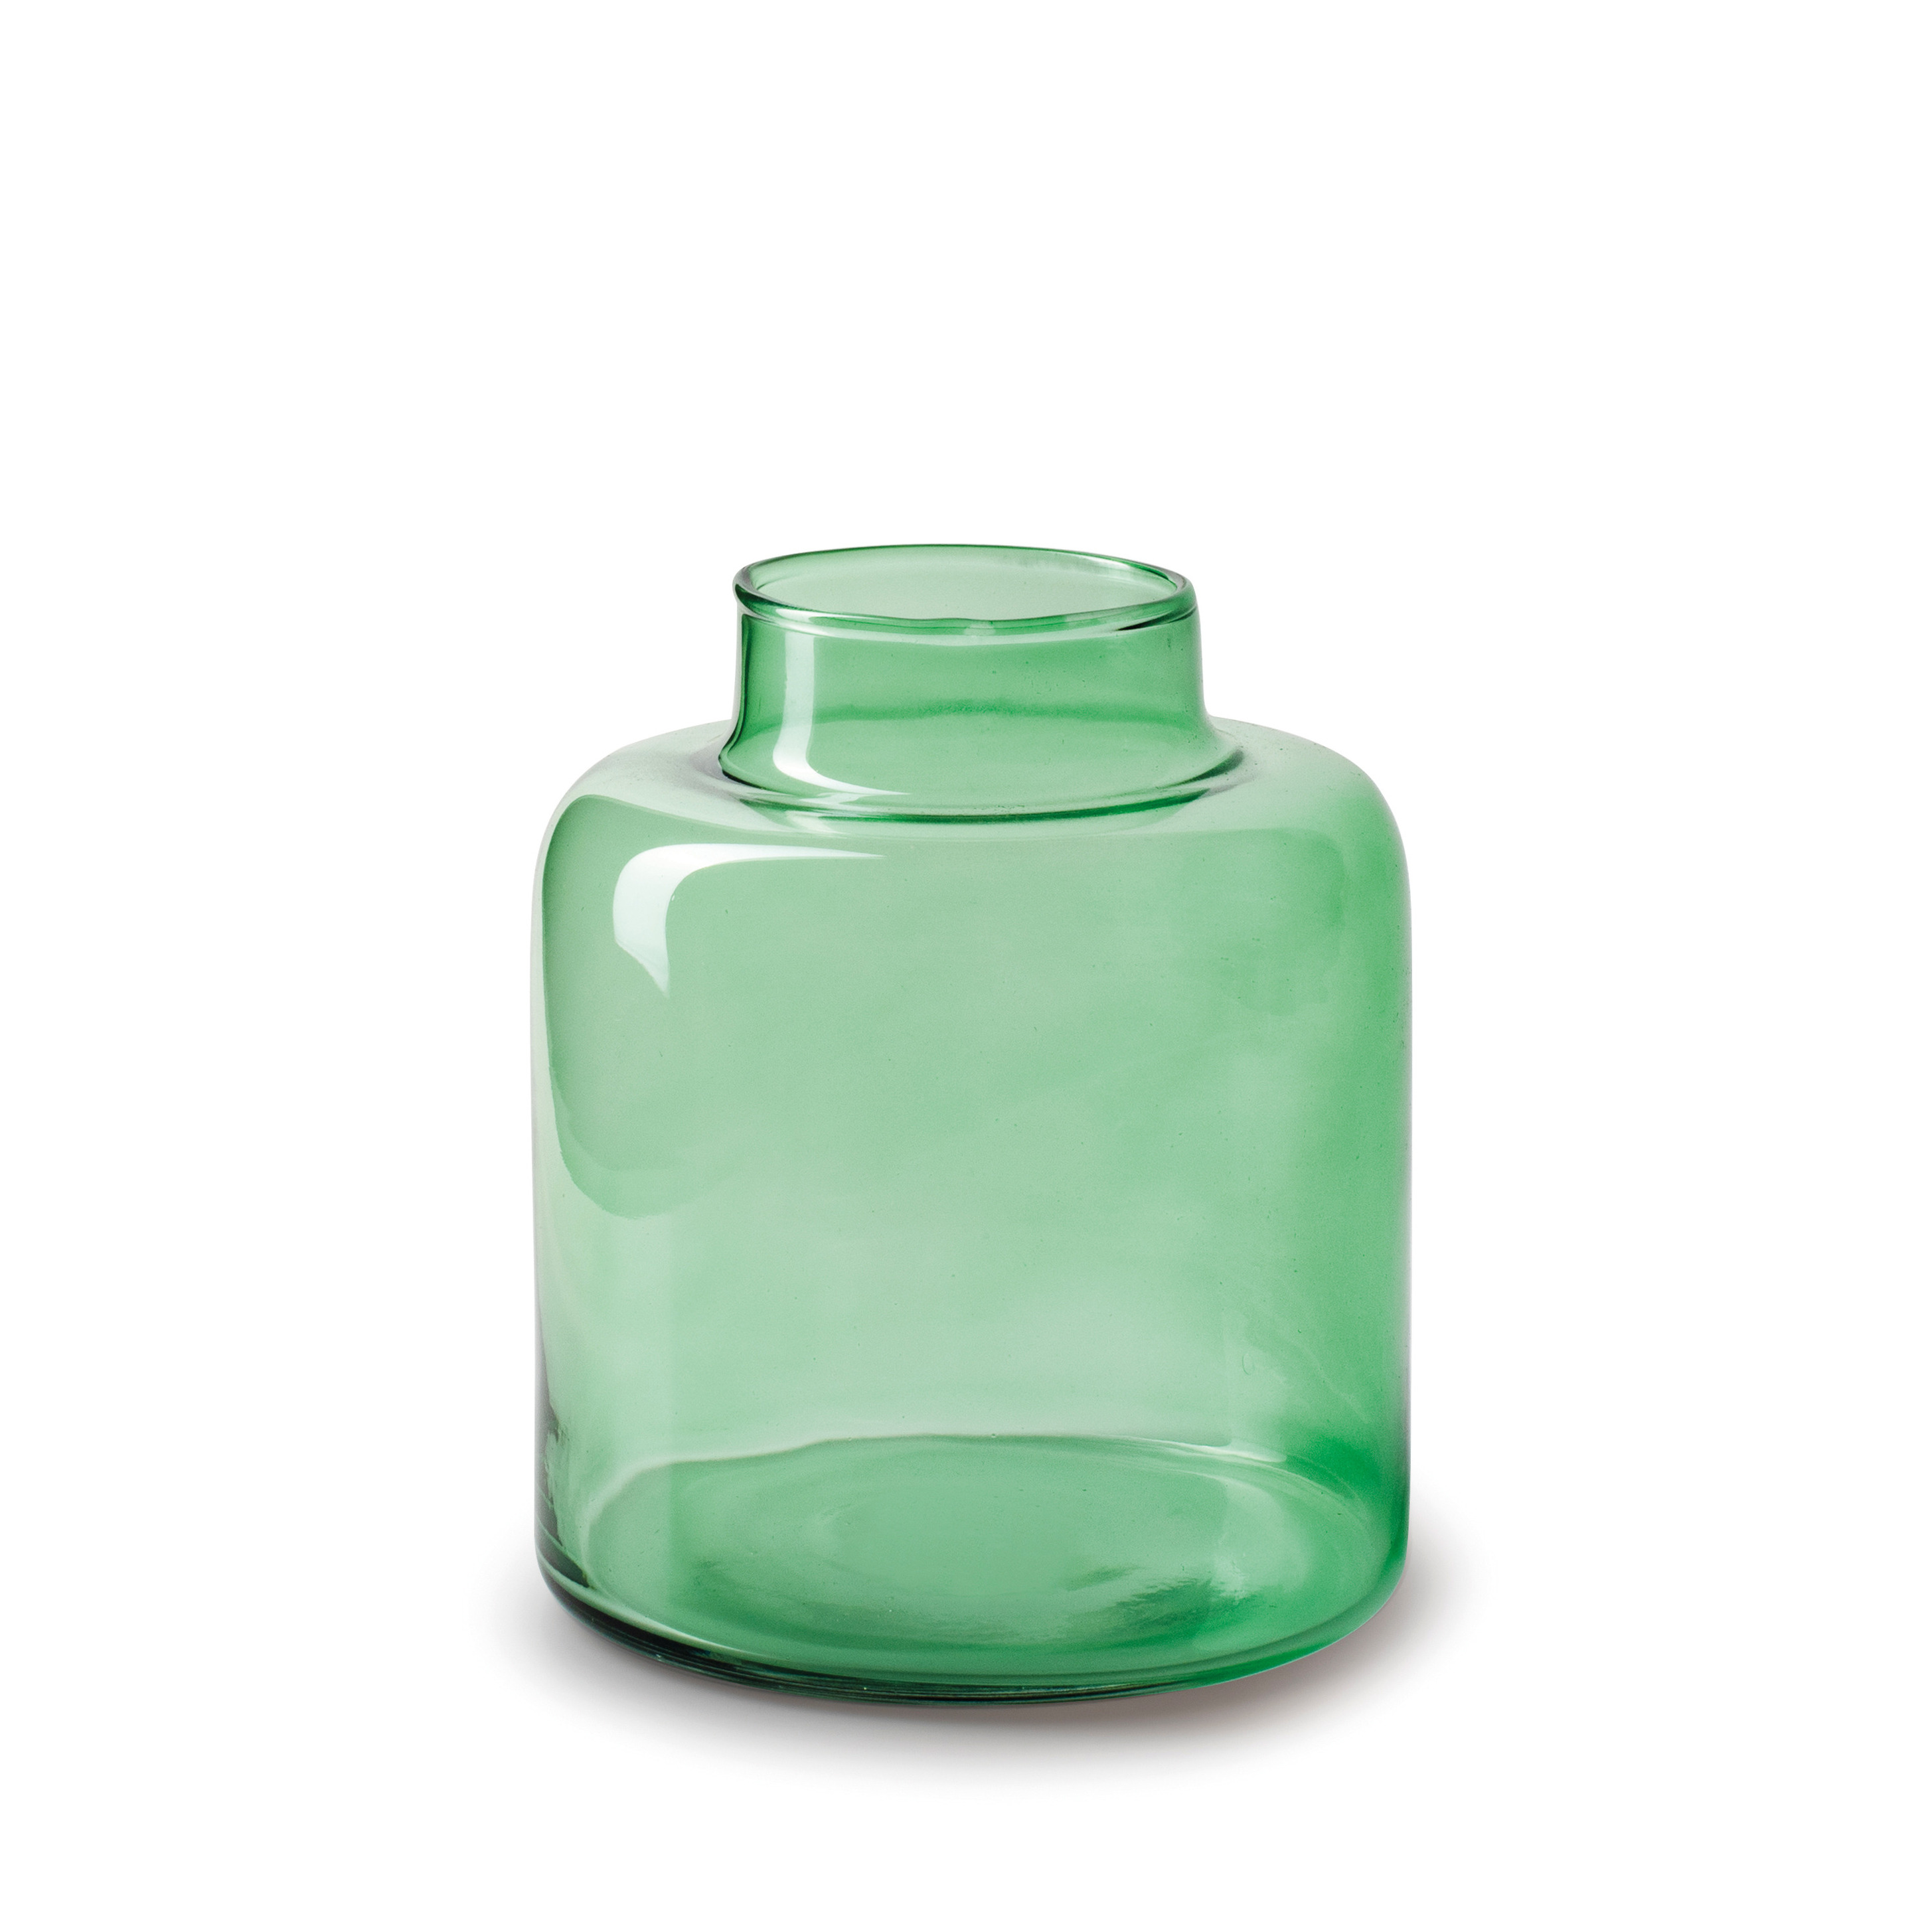 Jodeco Bloemenvaas Willem - transparant groen glas - D19 x H17 cm - fles vorm vaas -